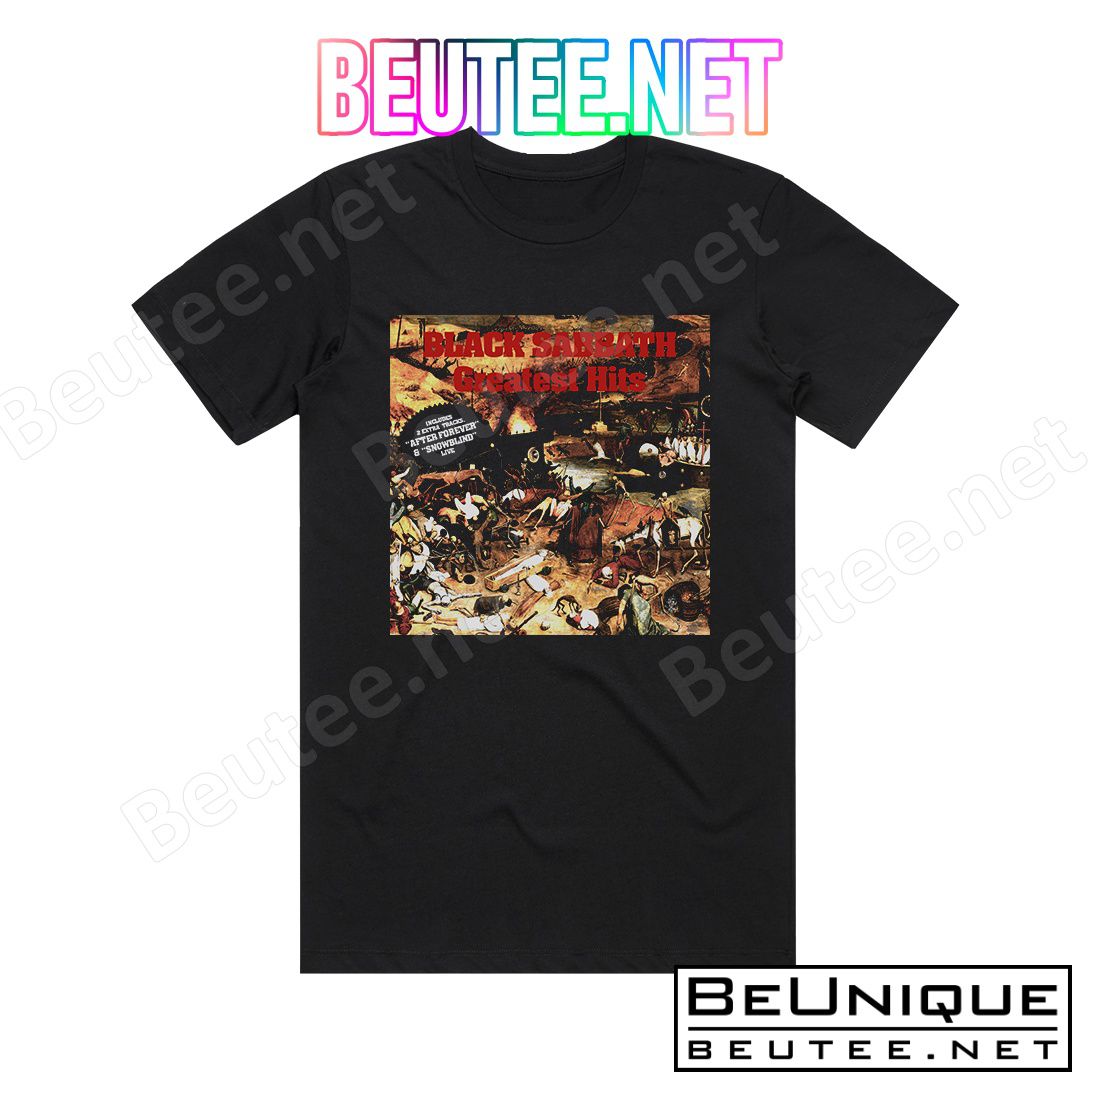 Black Sabbath Greatest Hits 3 Album Cover T-Shirt